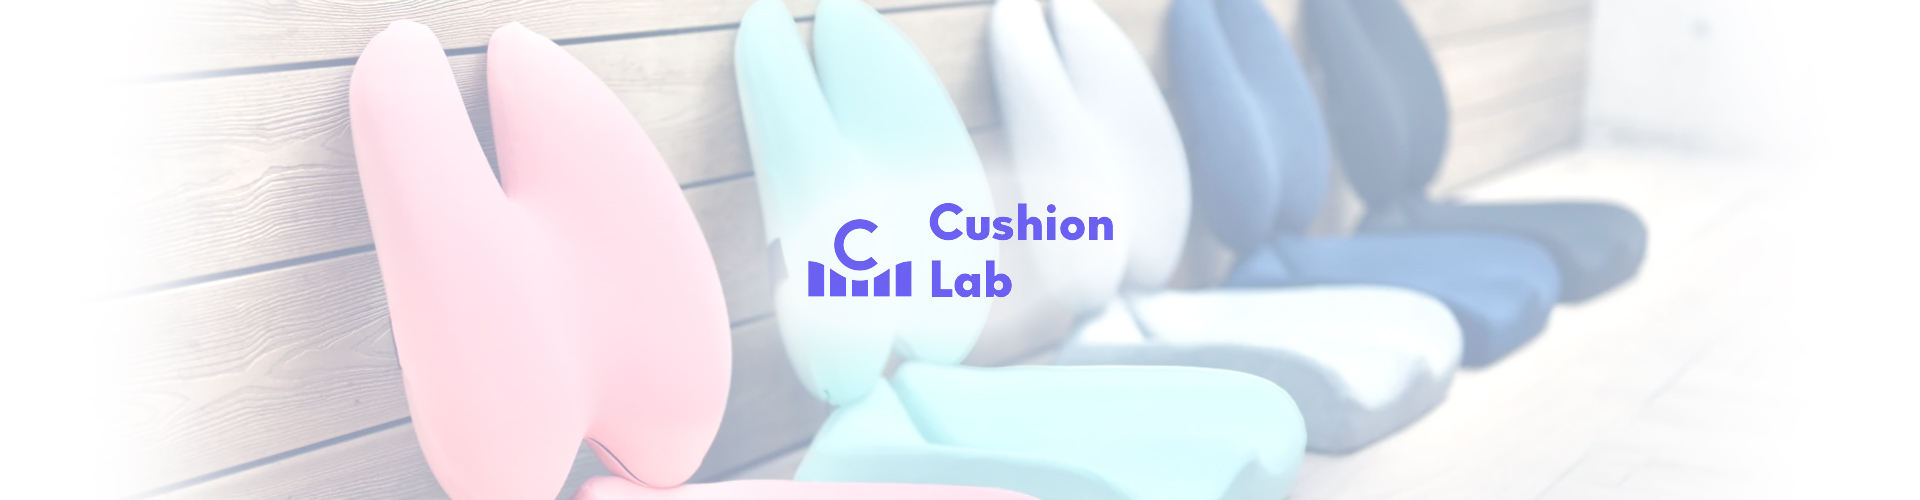 Cushion Lab - Logical Position